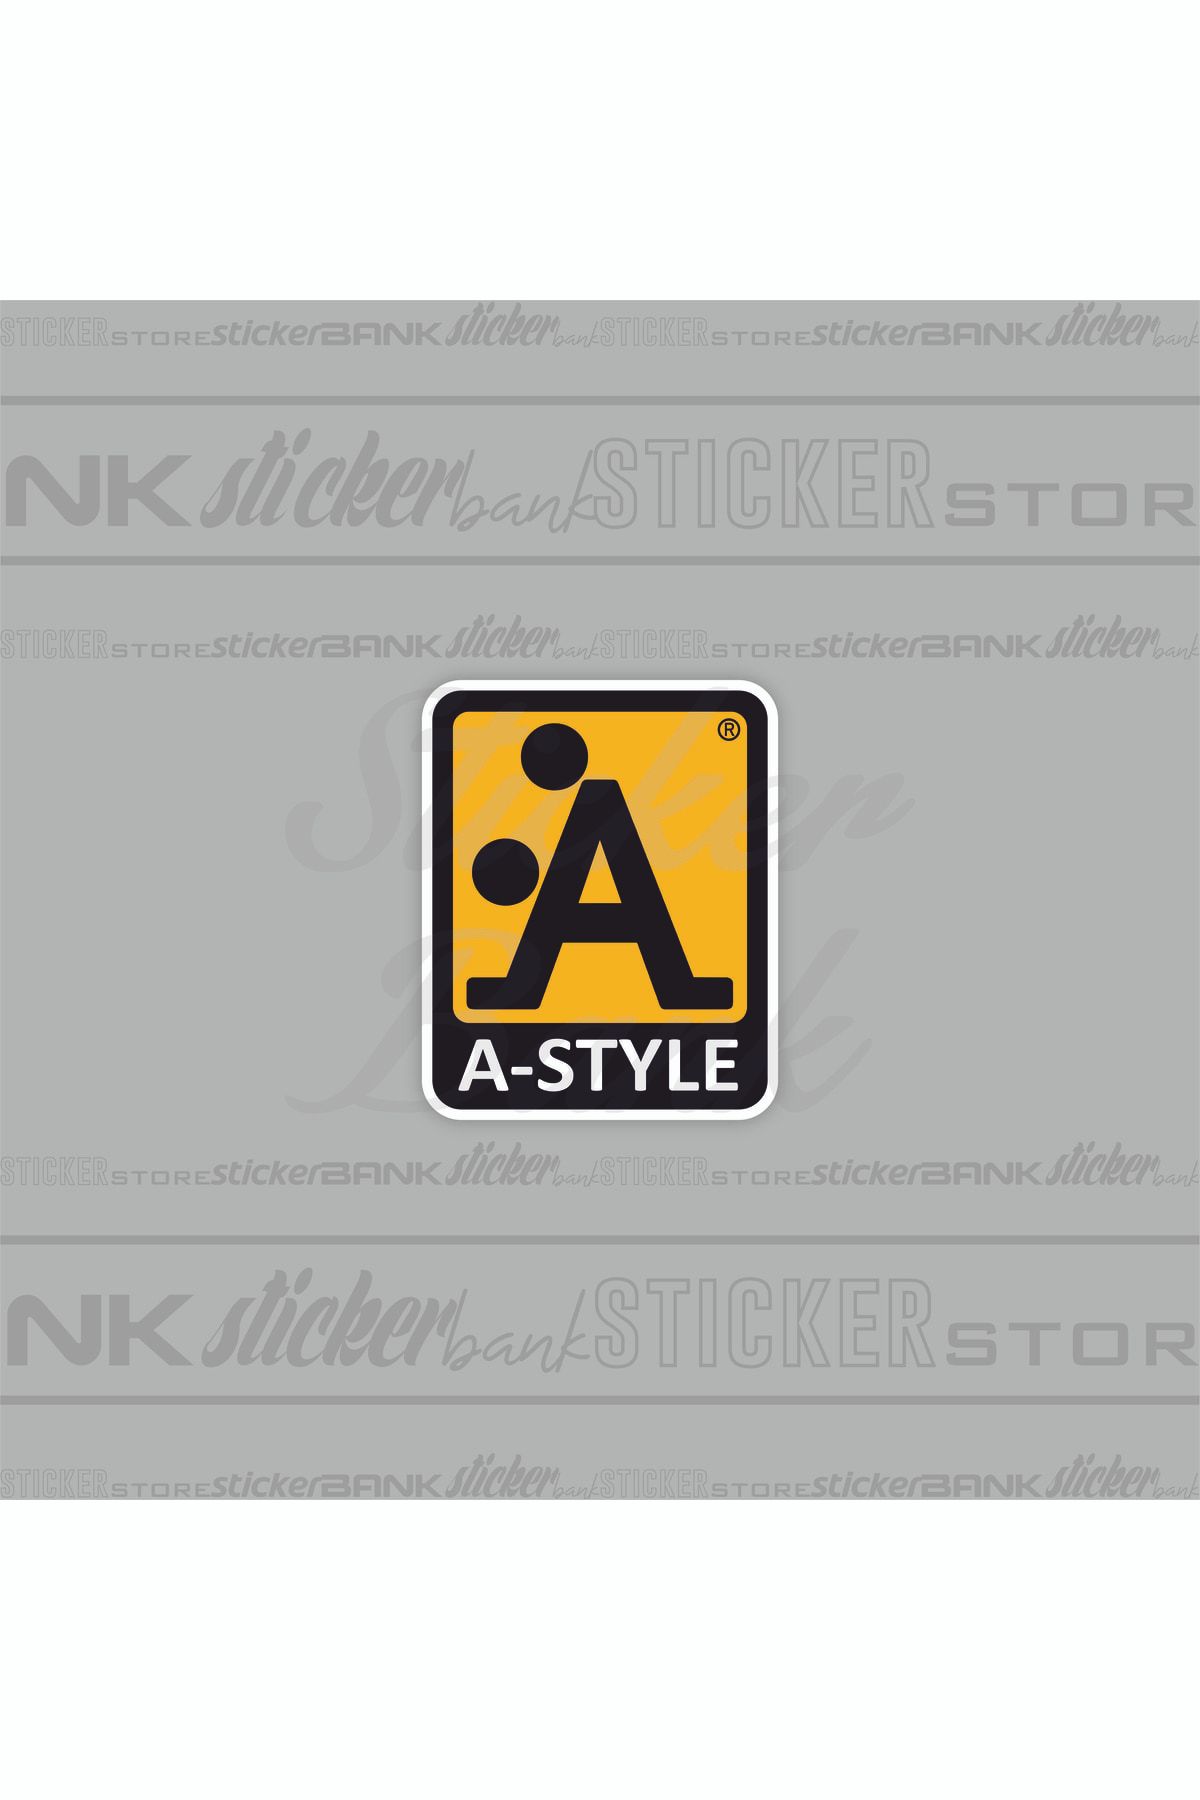 Sticker Bank Araba Sticker A-style